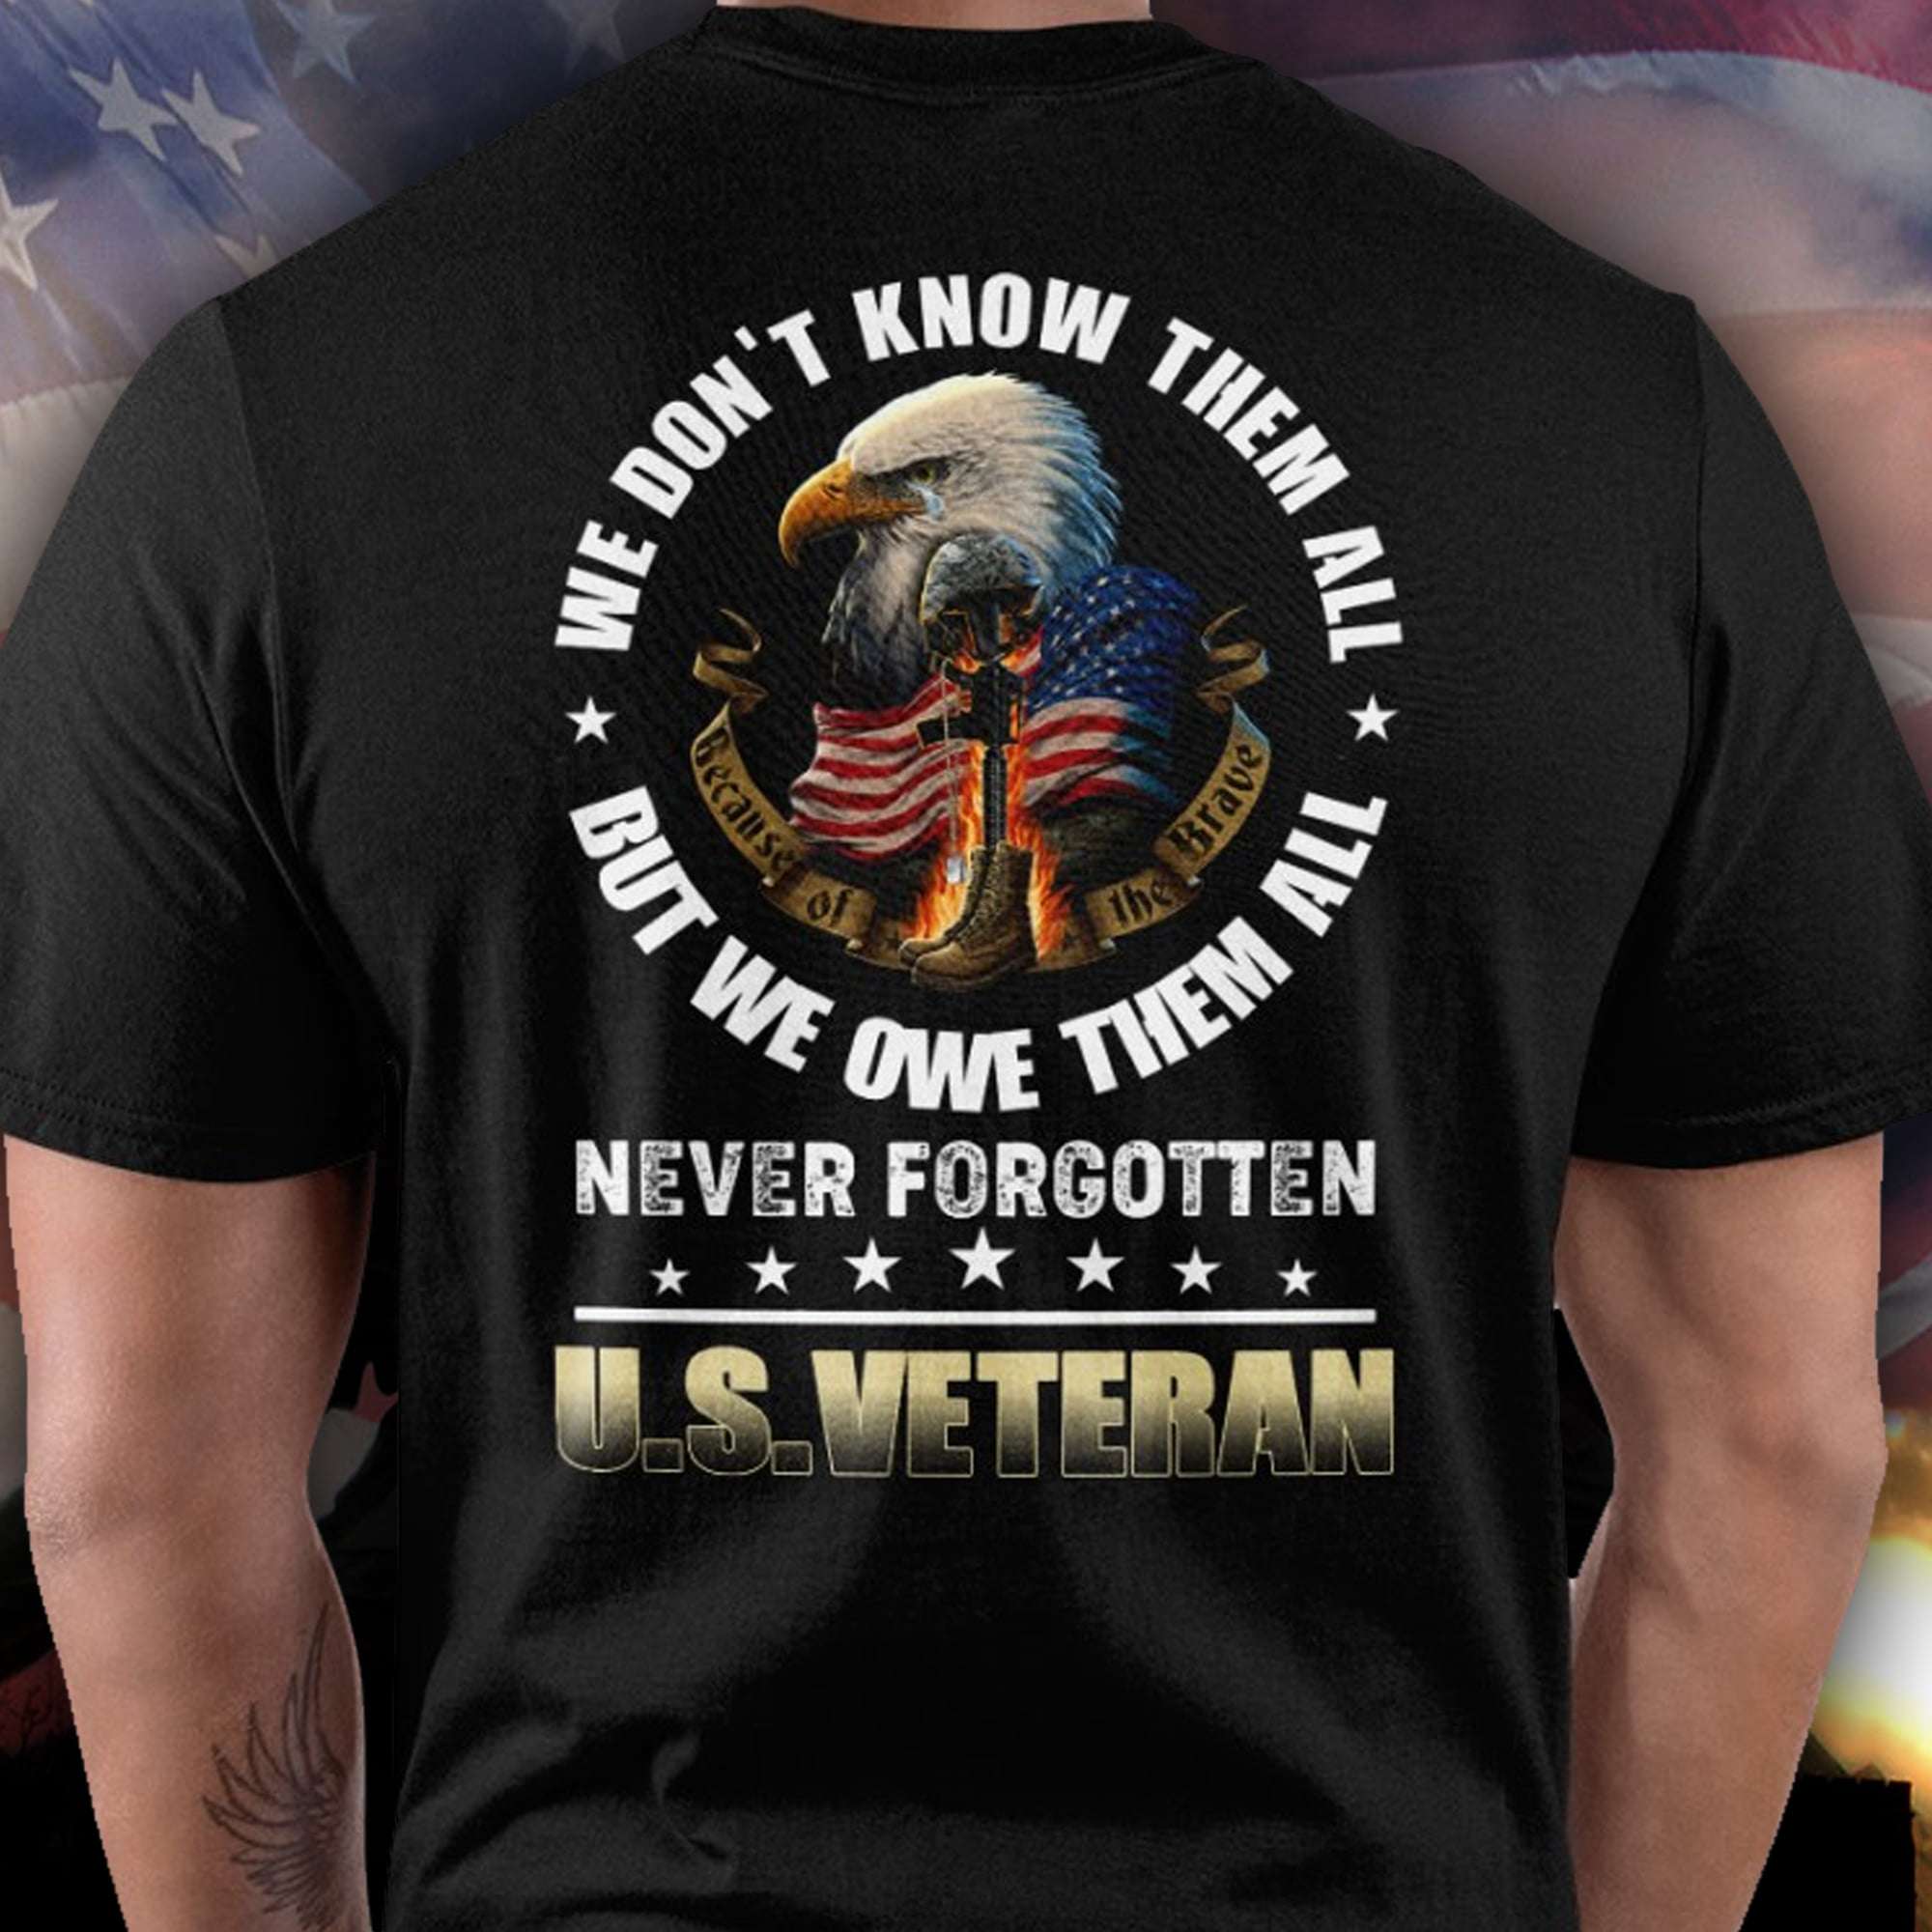 We don't know them all, but we owe them all - US Veteran, US veteran memories